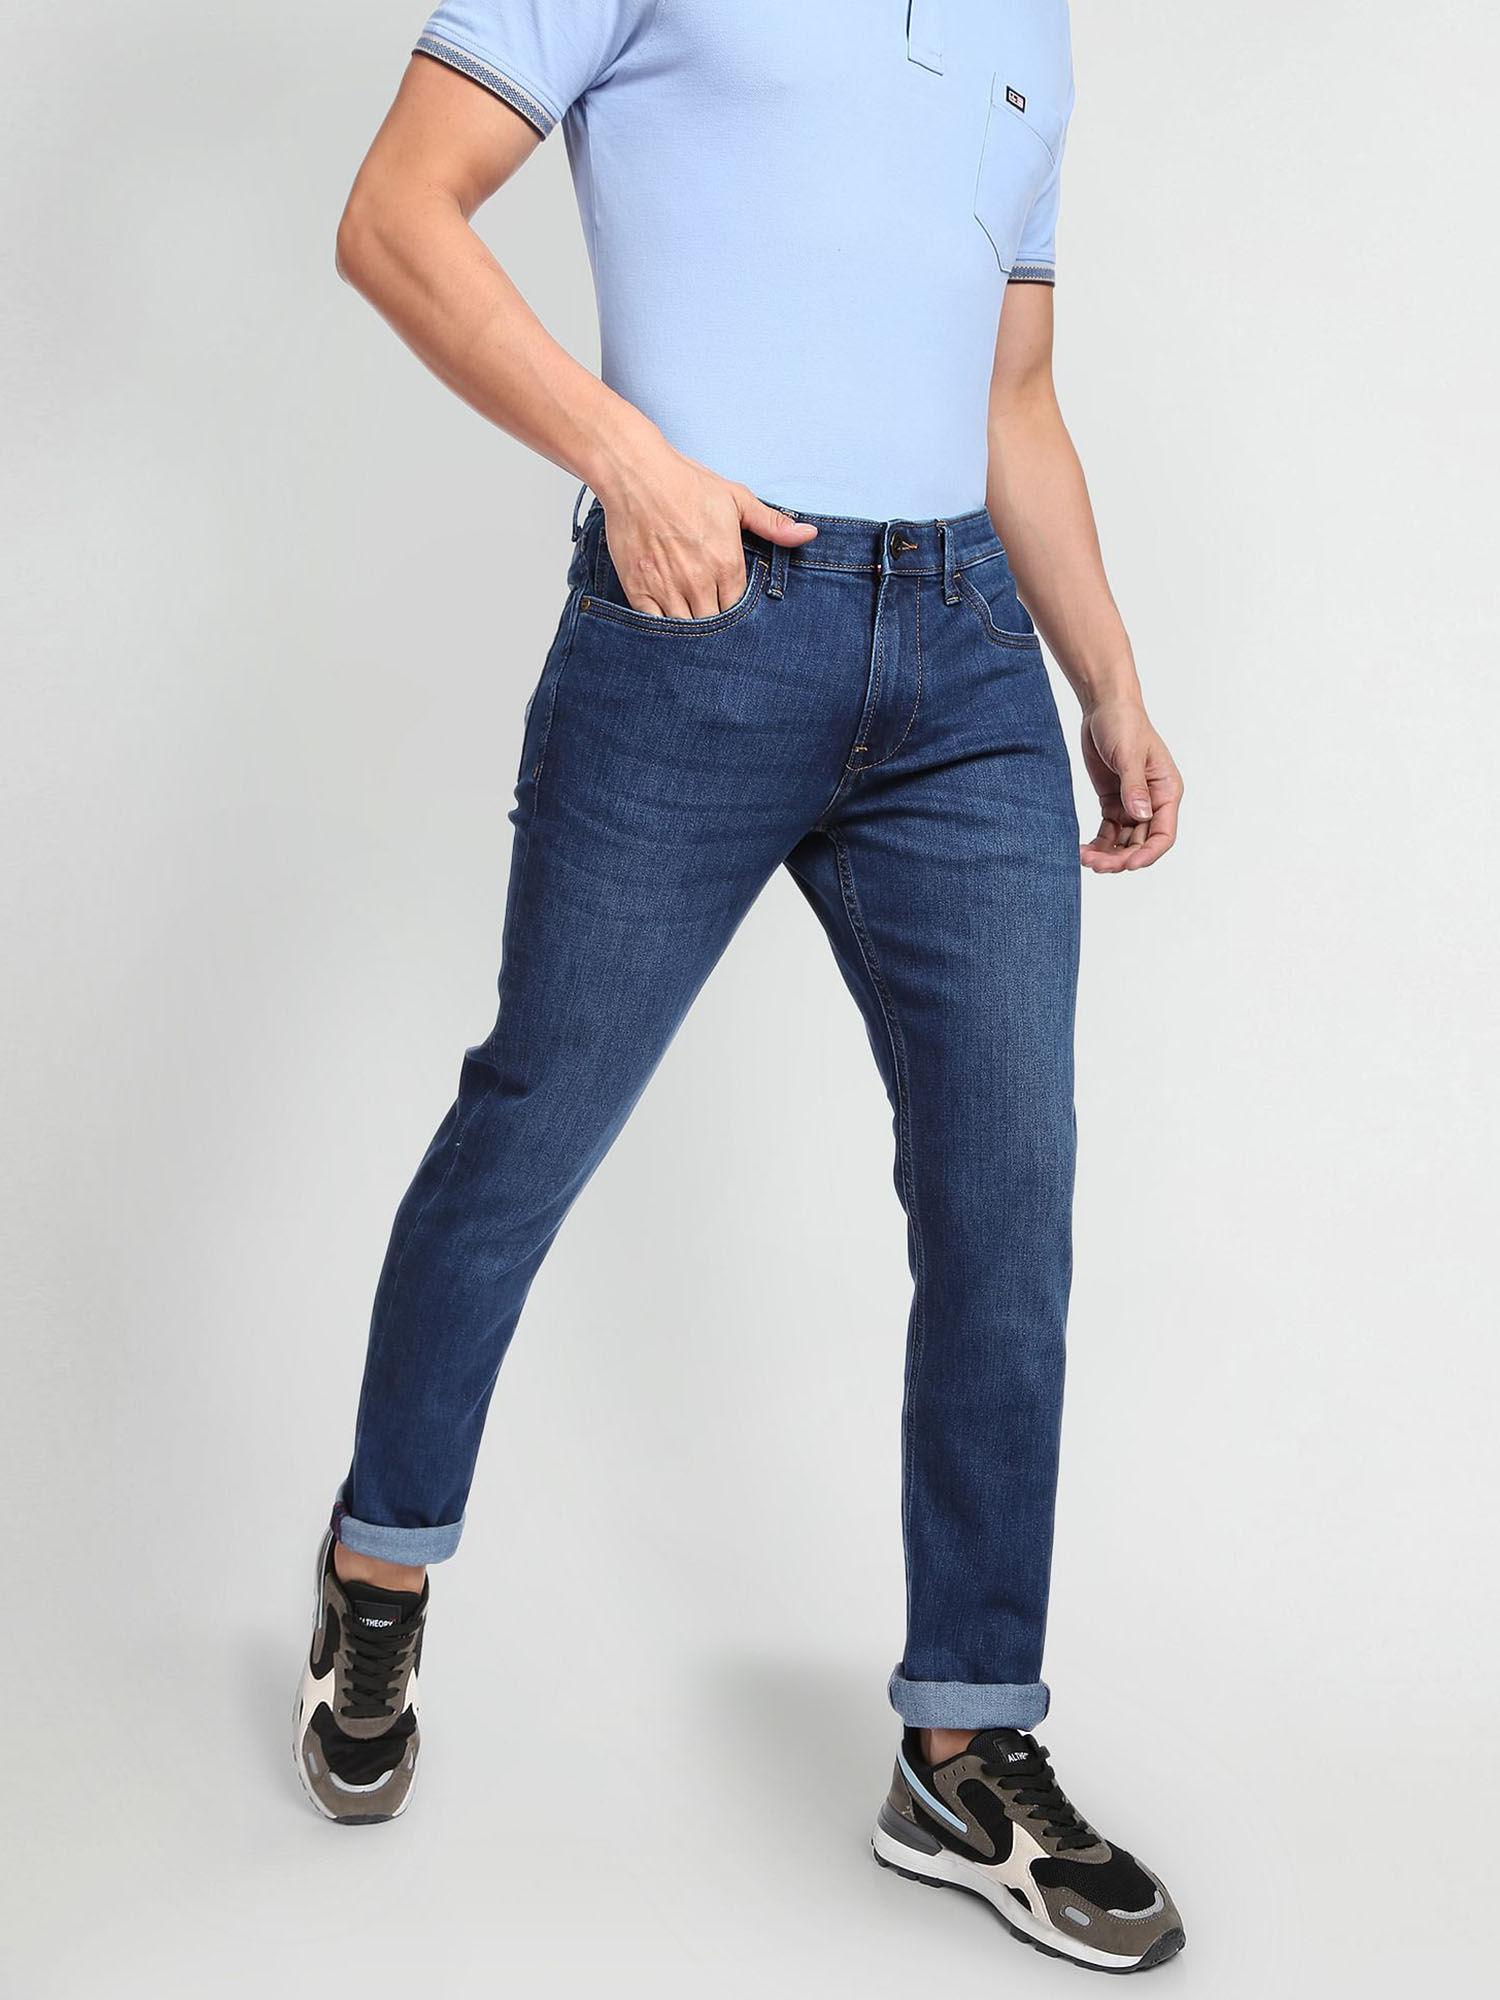 sports men navy blue mid rise jameson slim fit jeans